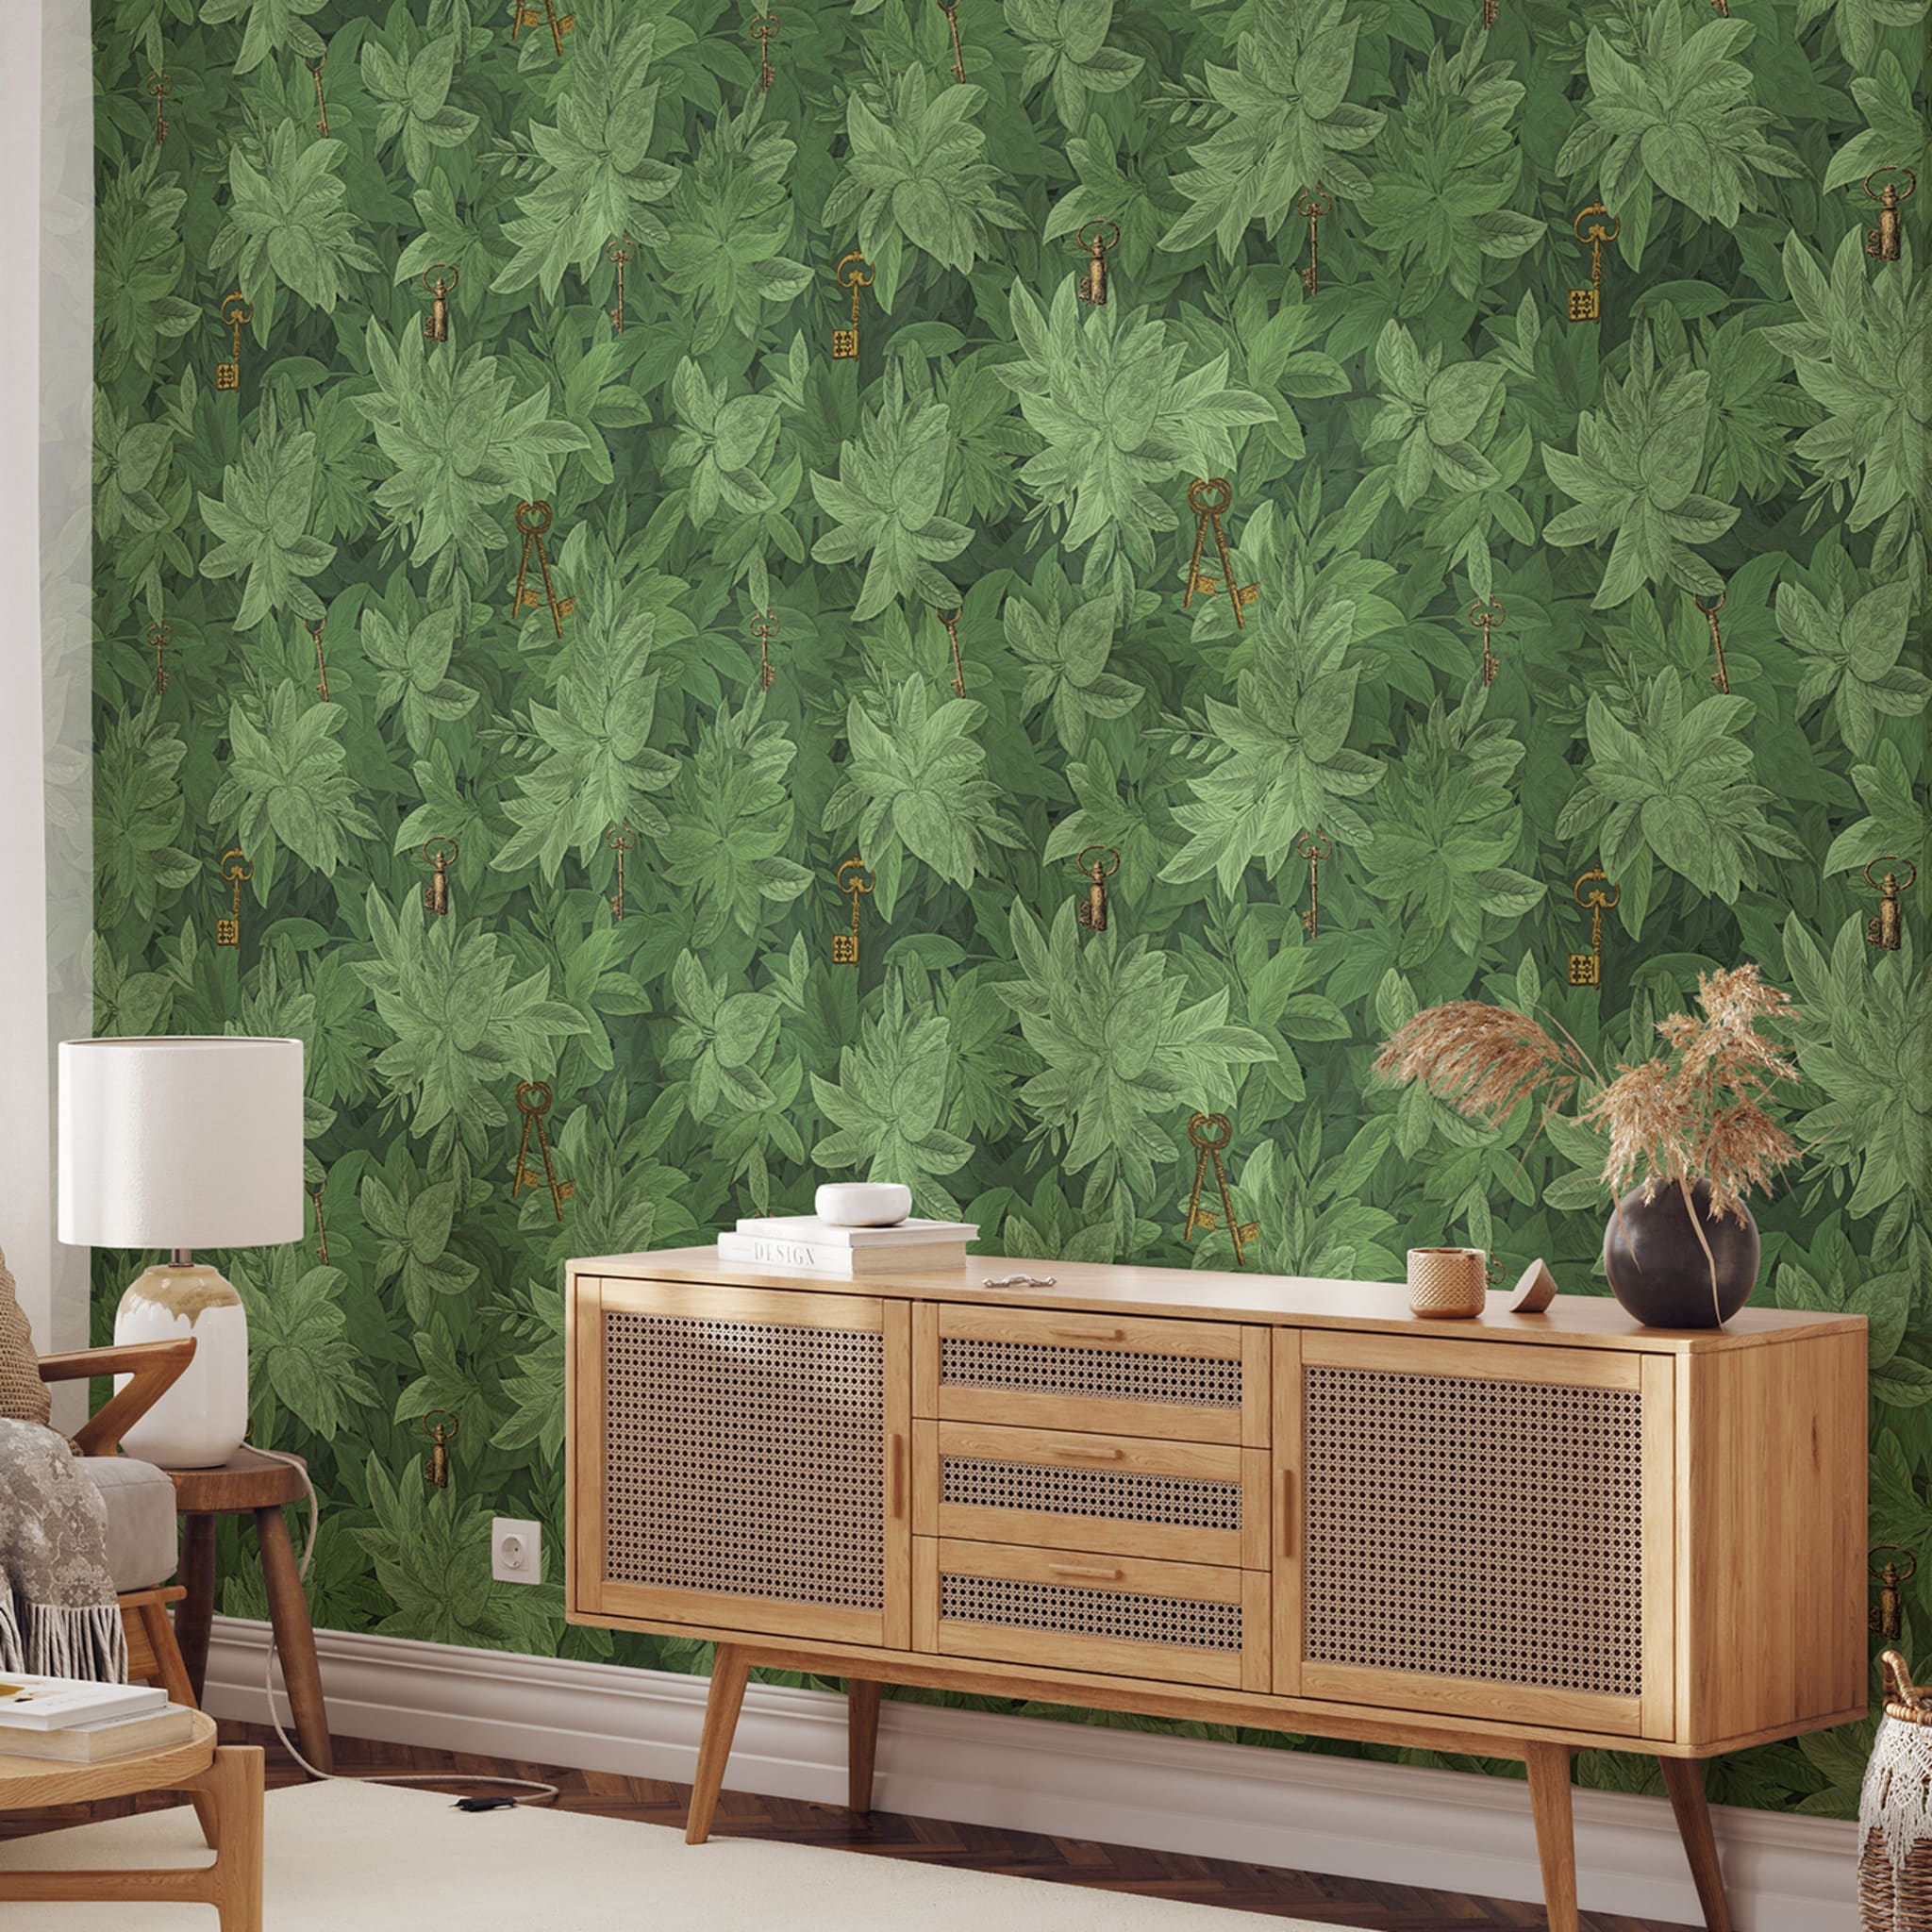 Green Ivy Leaves Wallpaper - Alternative view 1